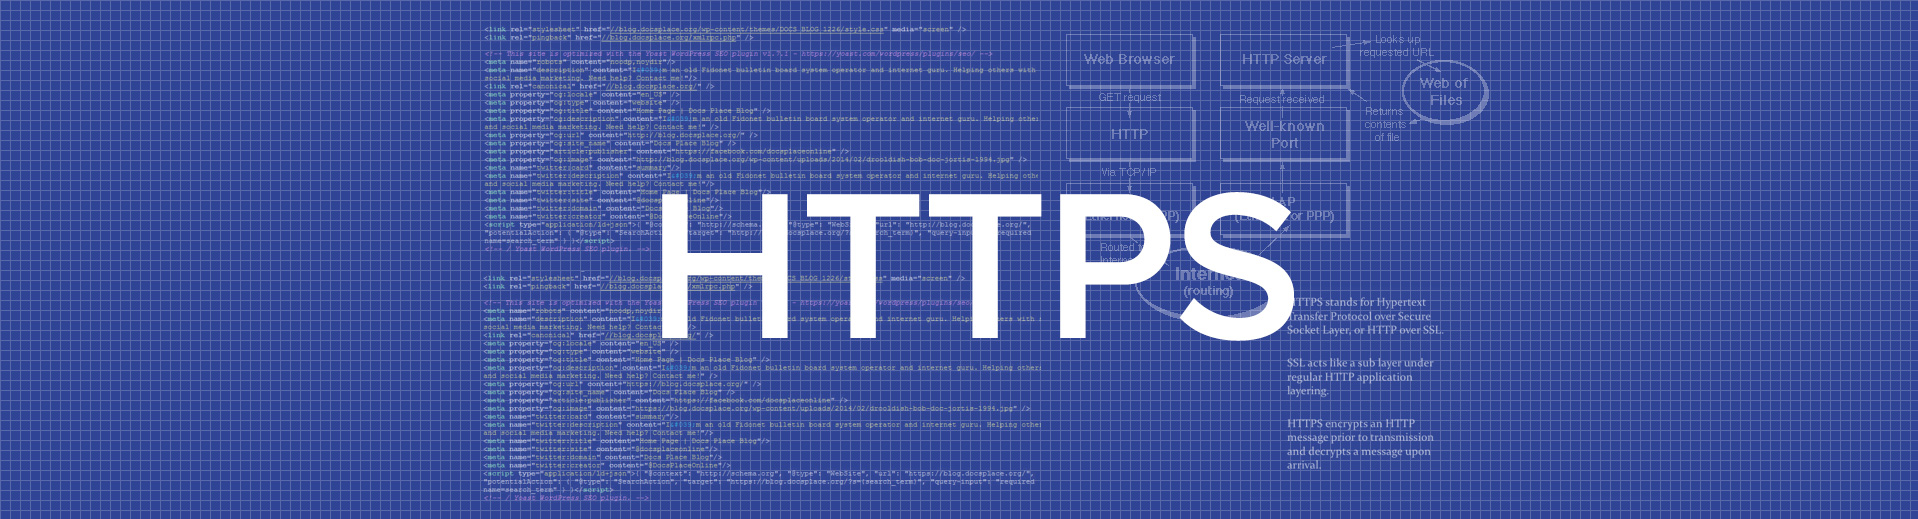 Сайт на протоколе https. Https-протокол картинки. Протокол картинка.